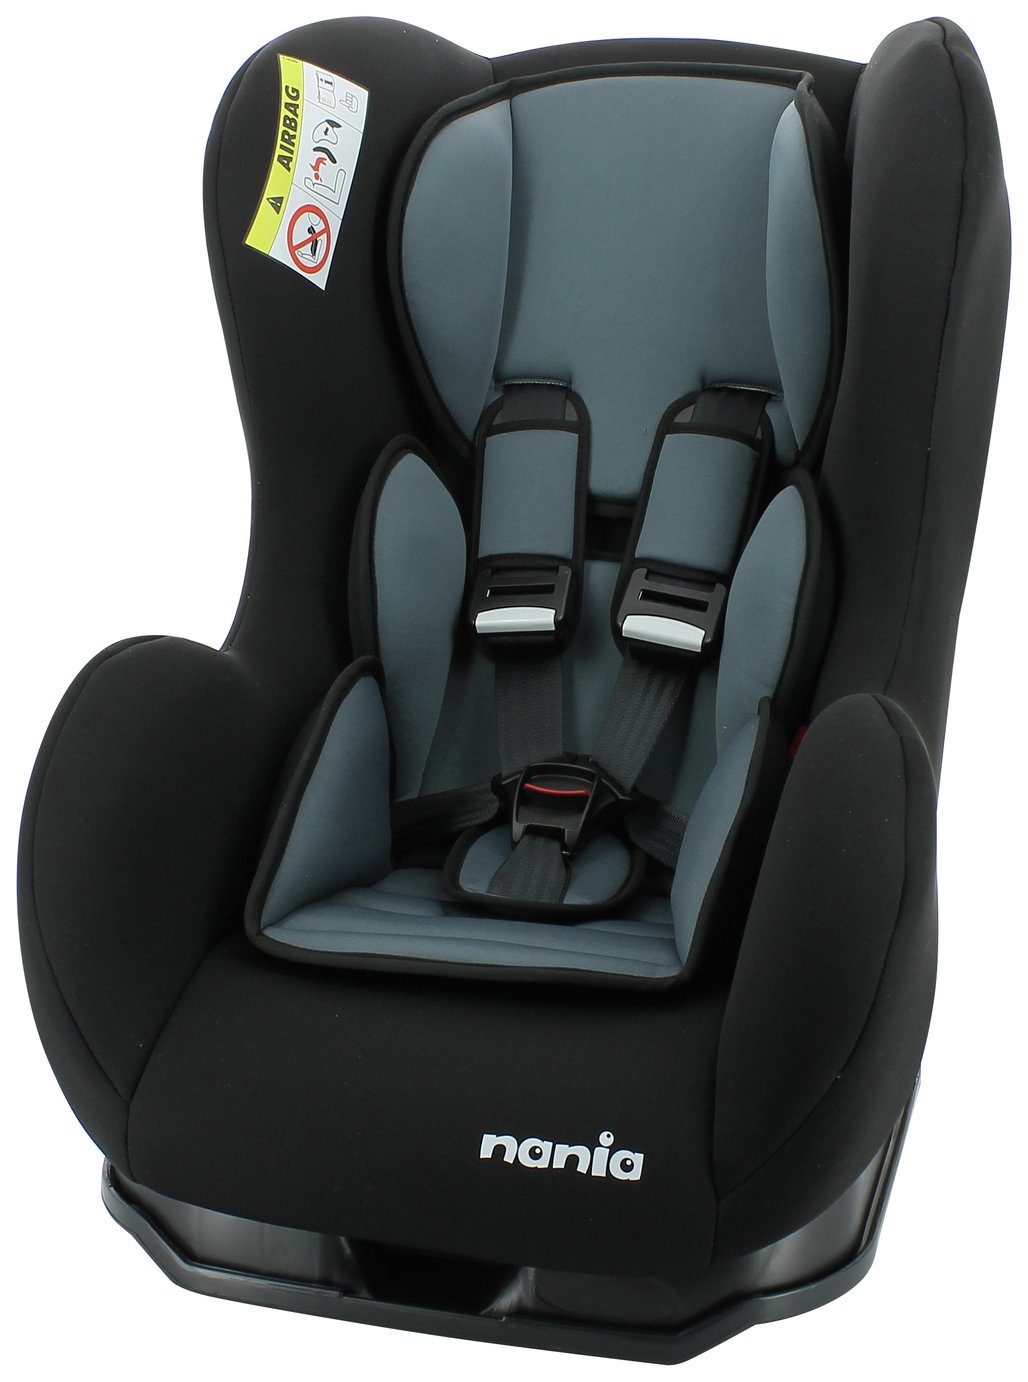 Nania Cosmo SP Eco Group 0/1/2 Car Seat - Black